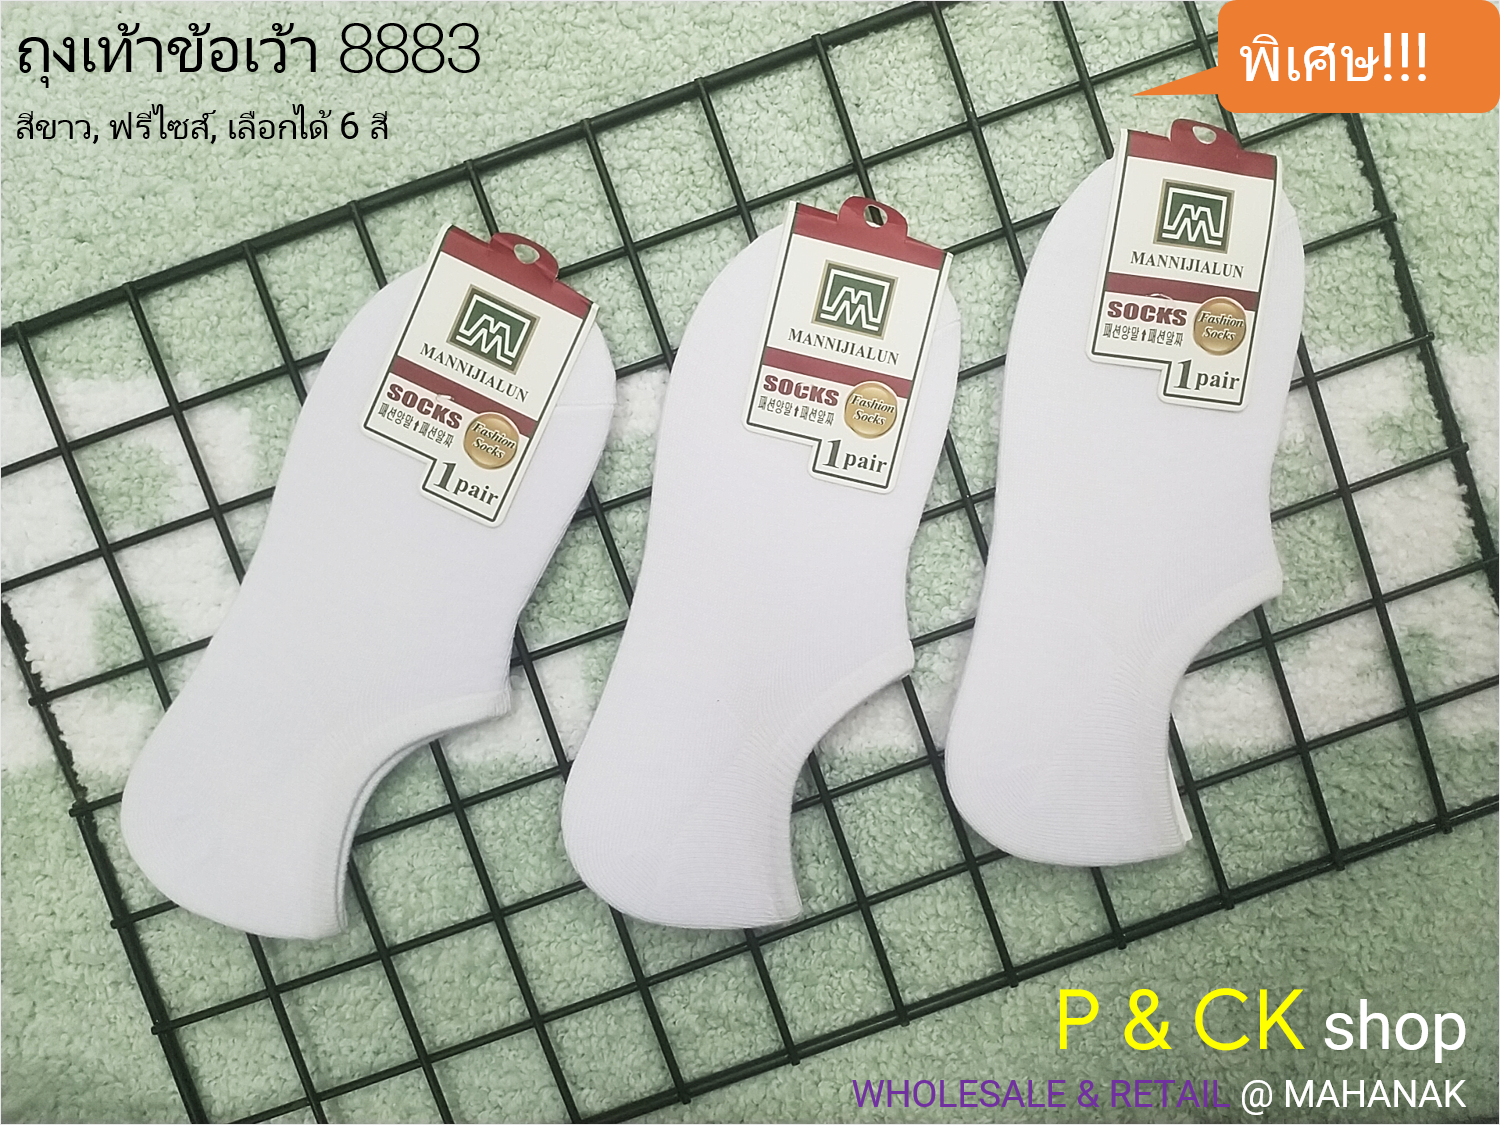 P & CK / ถุงเท้าผู้ชายข้อเว้าฟรีไซส์ #8883 [ขายเป็นคู่]: สีพื้น, เลือกได้ 6 สี, กรุณาเลือกให้ดี [เลือกสีโปรดกด "เพิ่มลงรถเข็น"]